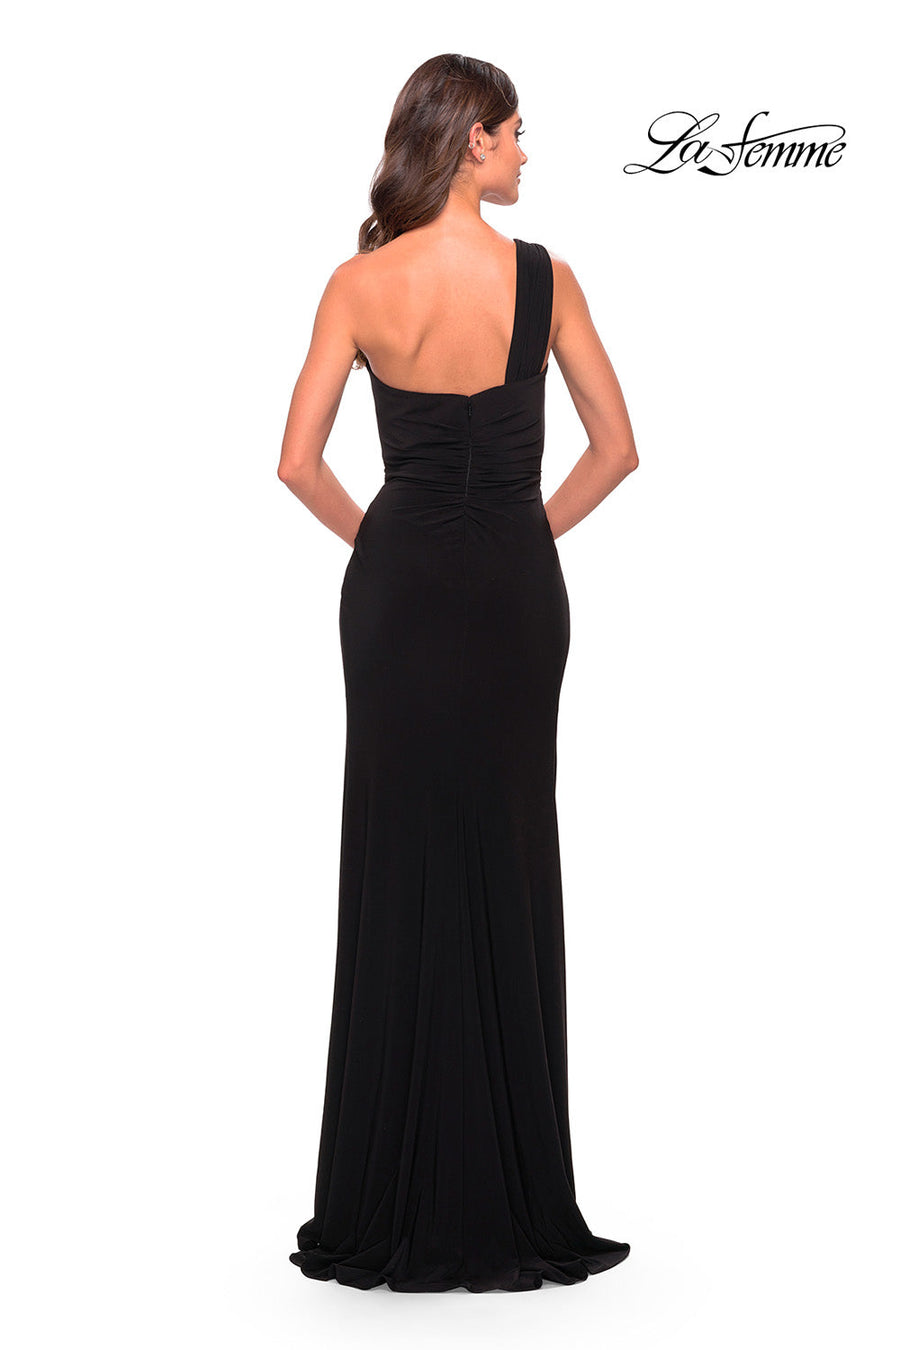 La Femme 31357 prom dress images.  La Femme 31357 is available in these colors: Black.